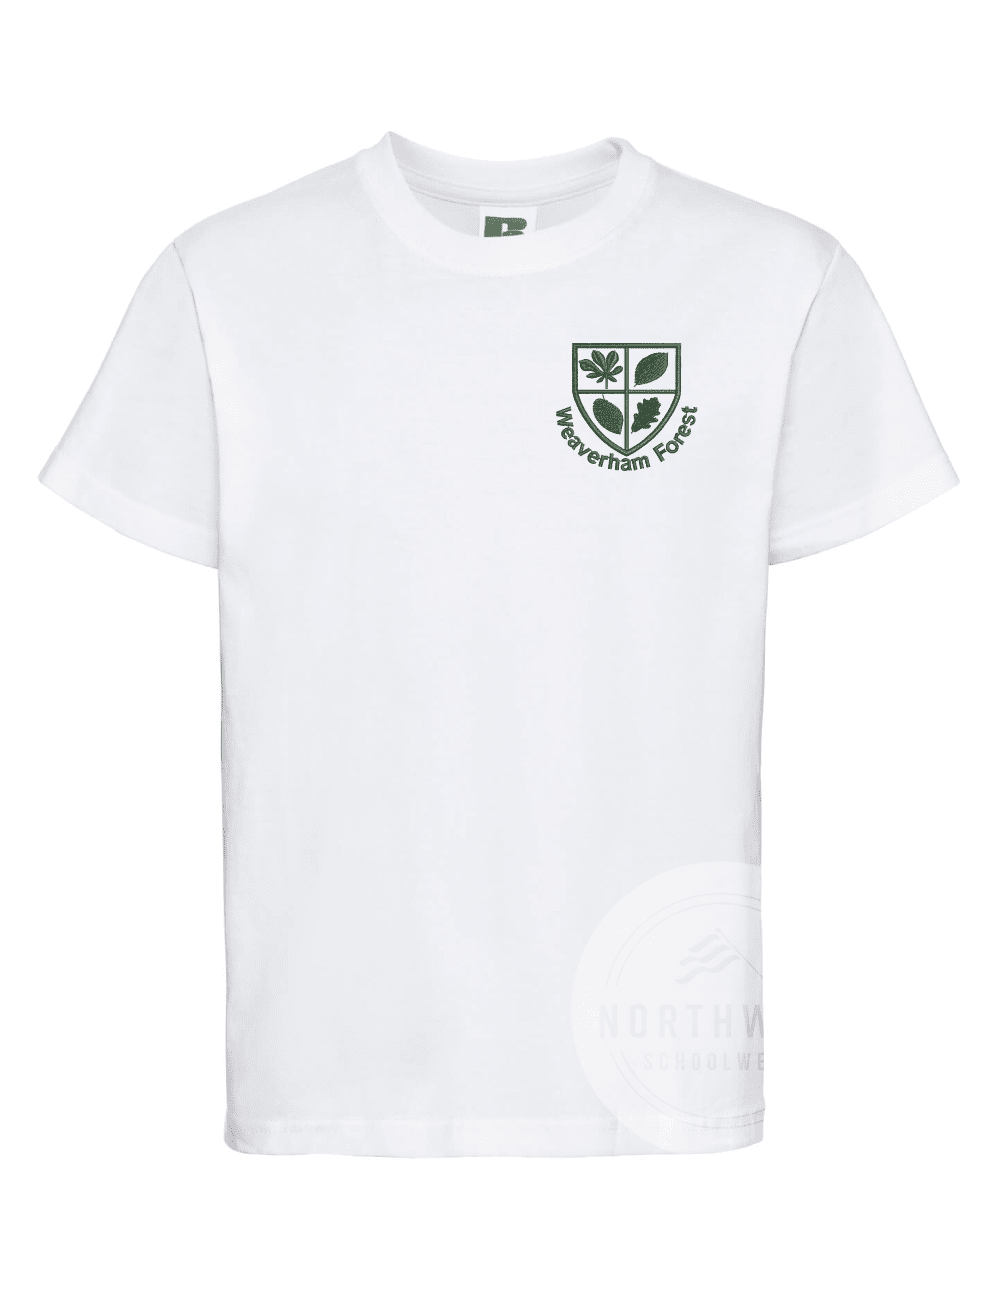 Weaverham Forest Primary School T-Shirt